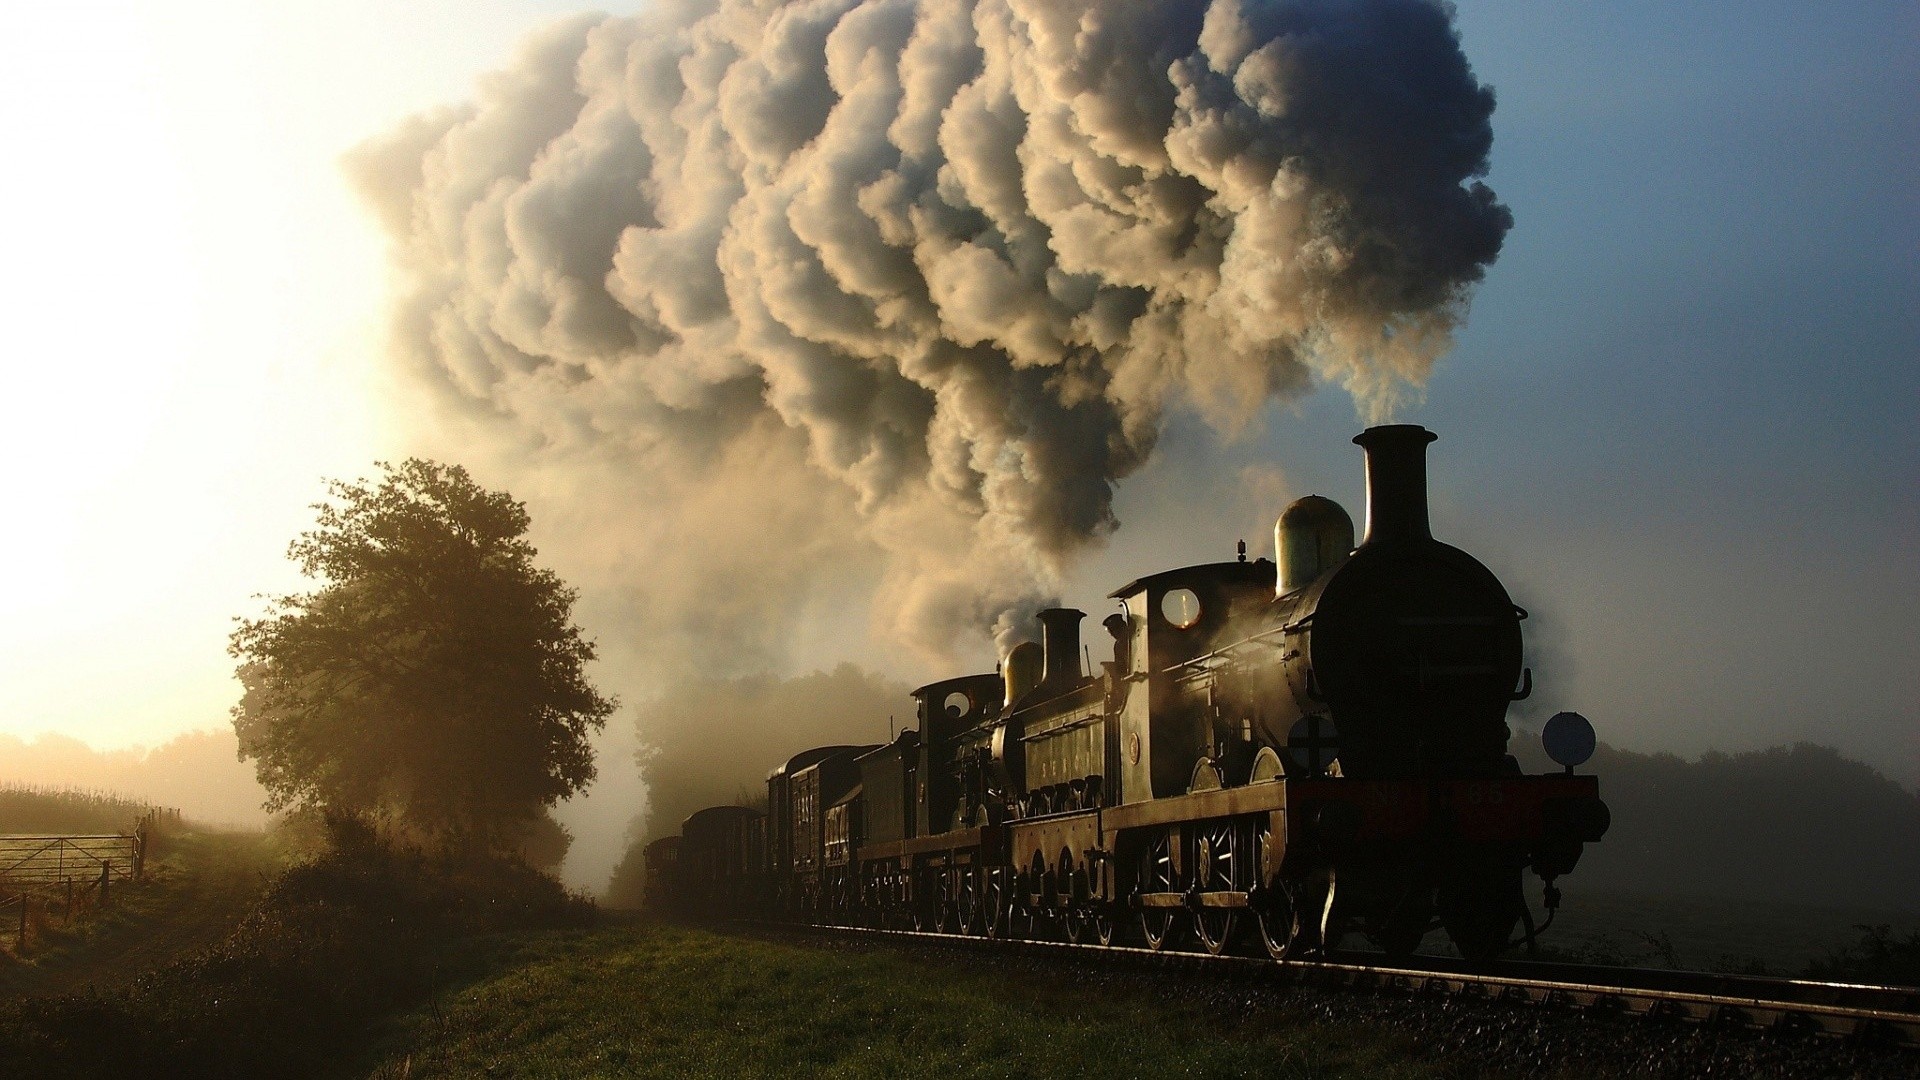 General 1920x1080 train railway steam locomotive smoke trees vehicle Steam Train locomotive